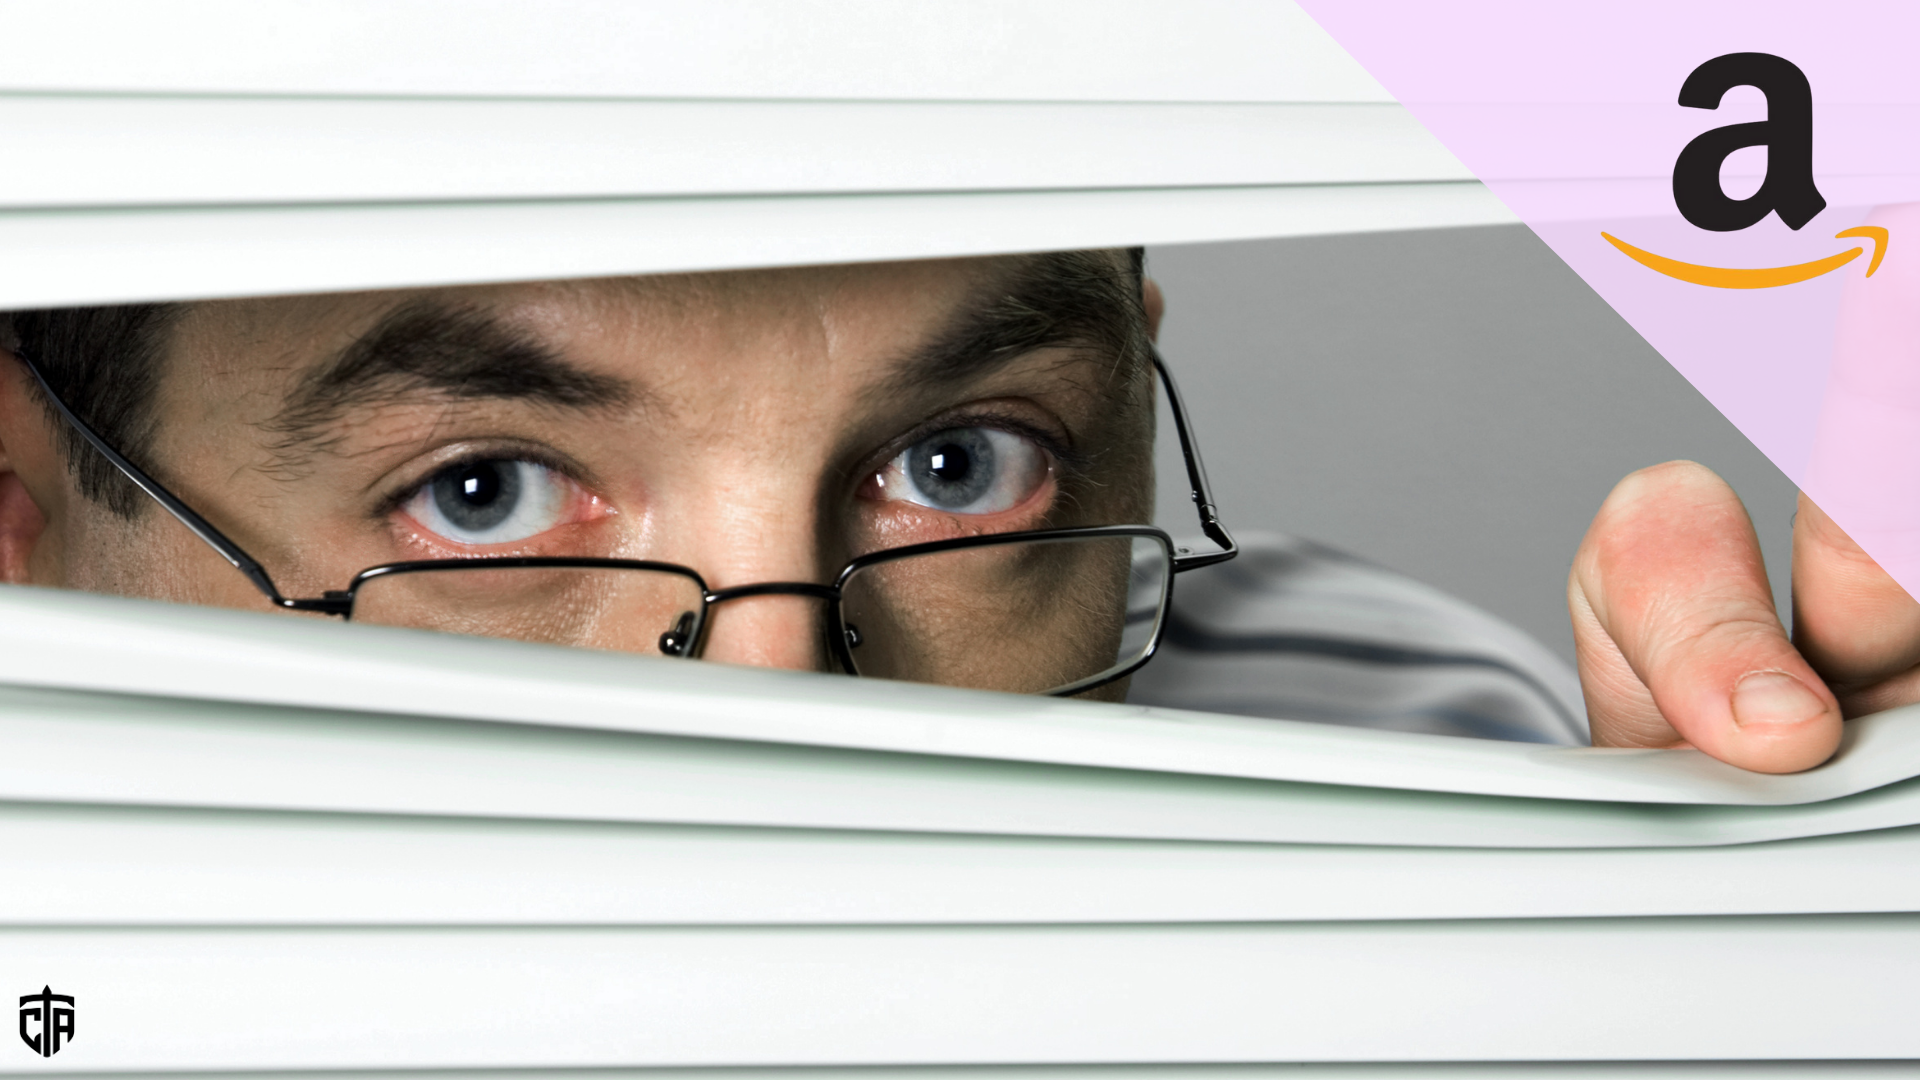 A man wearing glasses peers between slats in horizontal blinds - Amazon Flex drivers